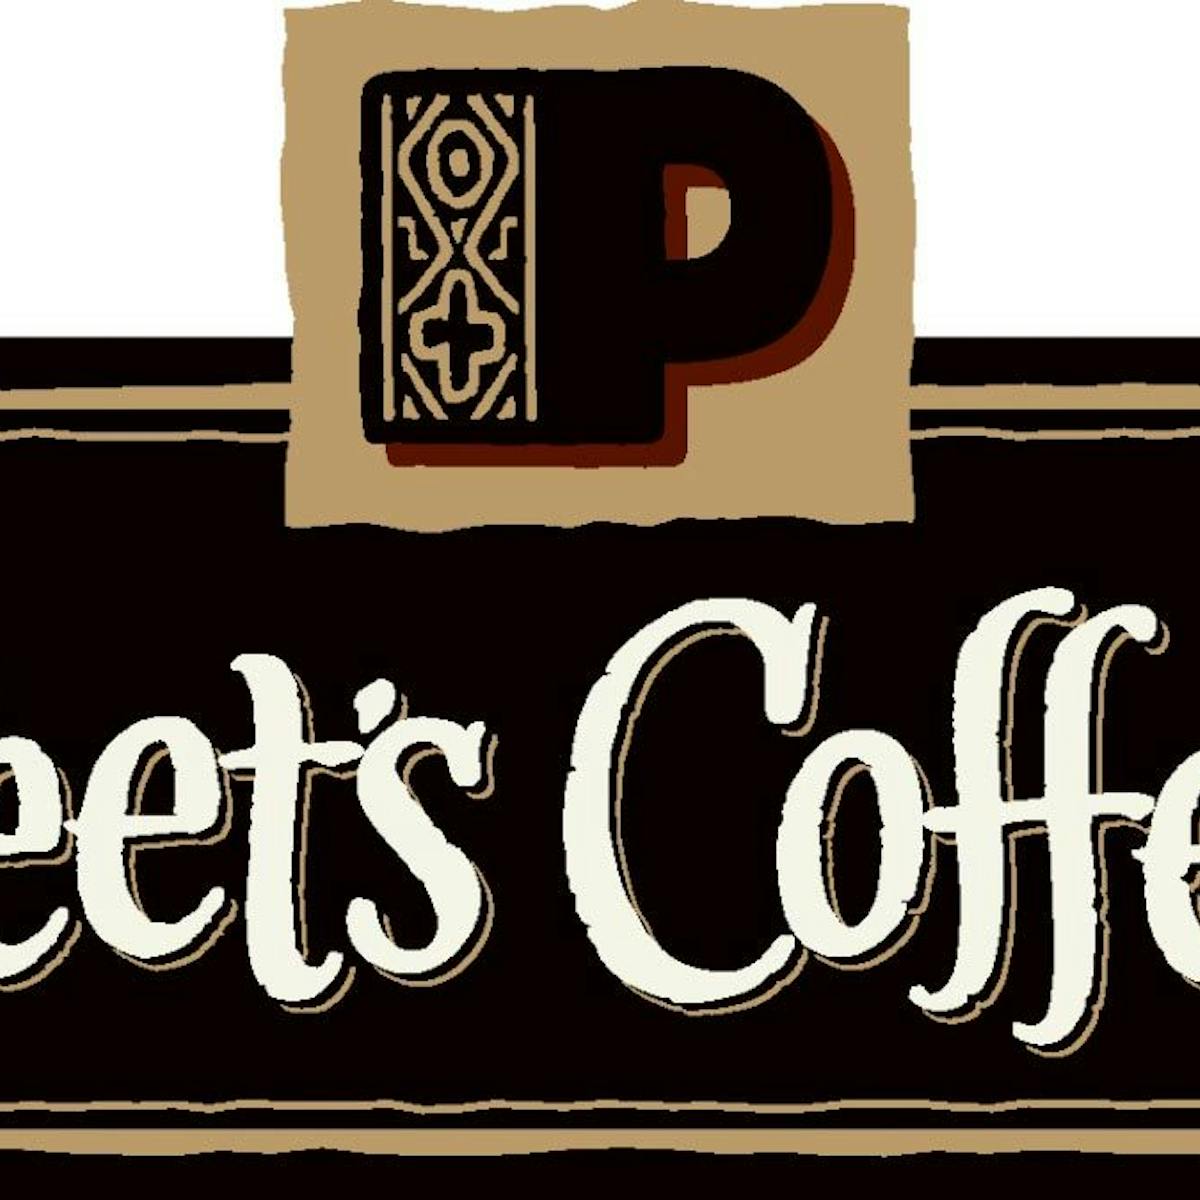 Peet s Coffee Logo 56154f793a9a3